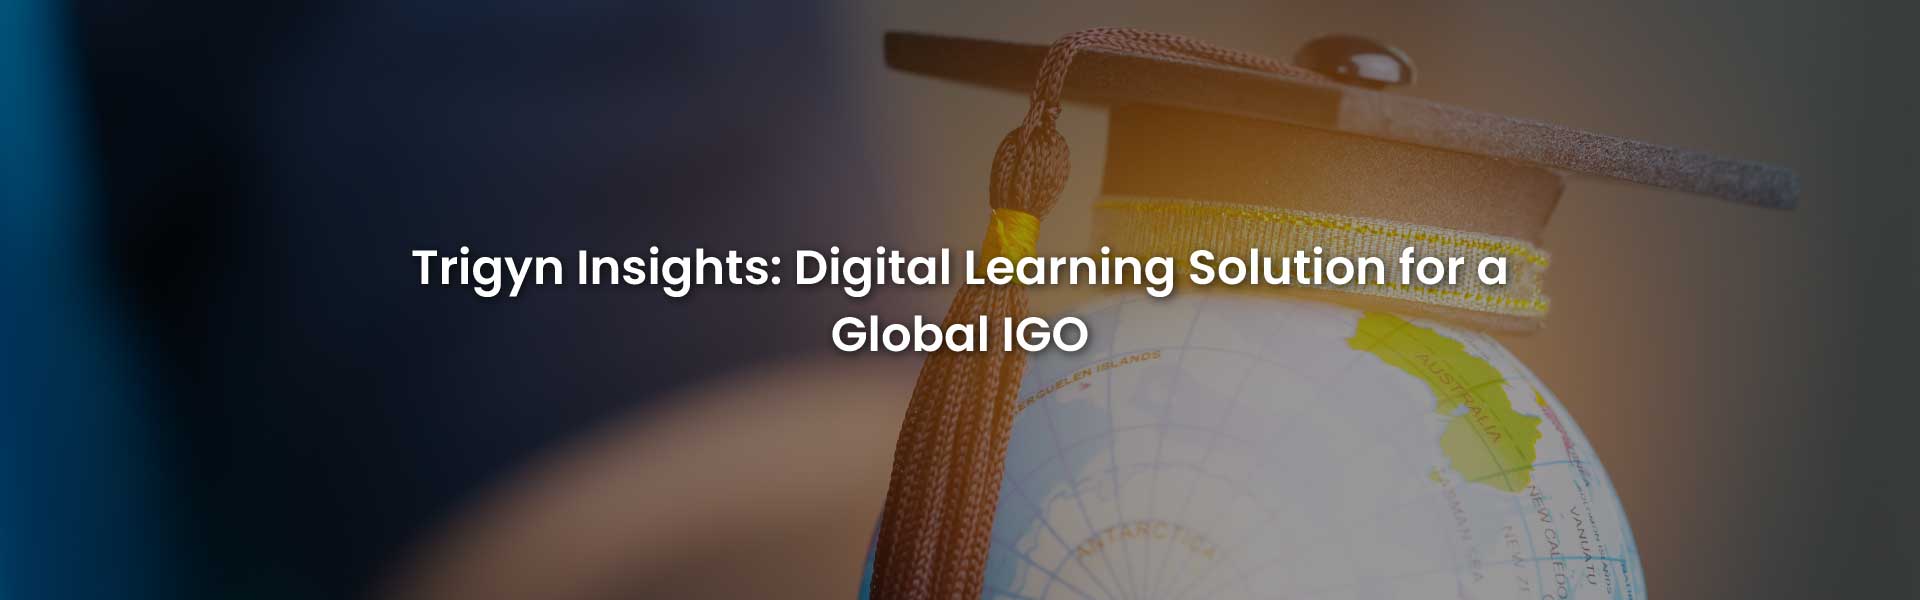 Digital Learning Solution for IGO Case Study